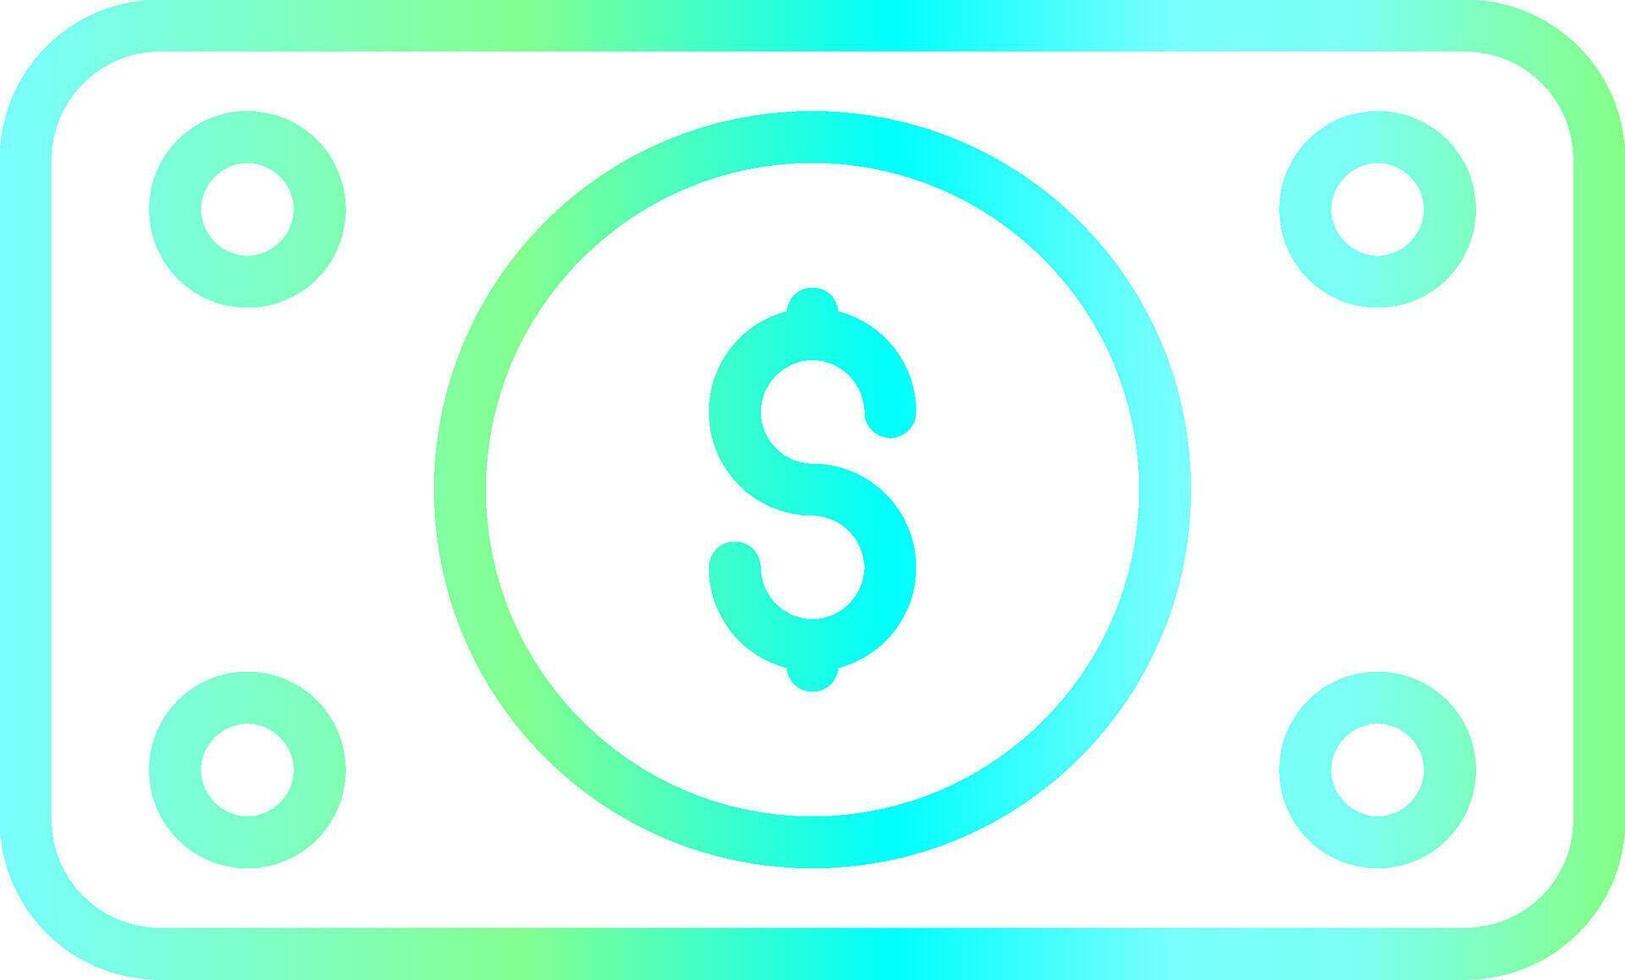 Money Bill Wave Creative Icon Design vector